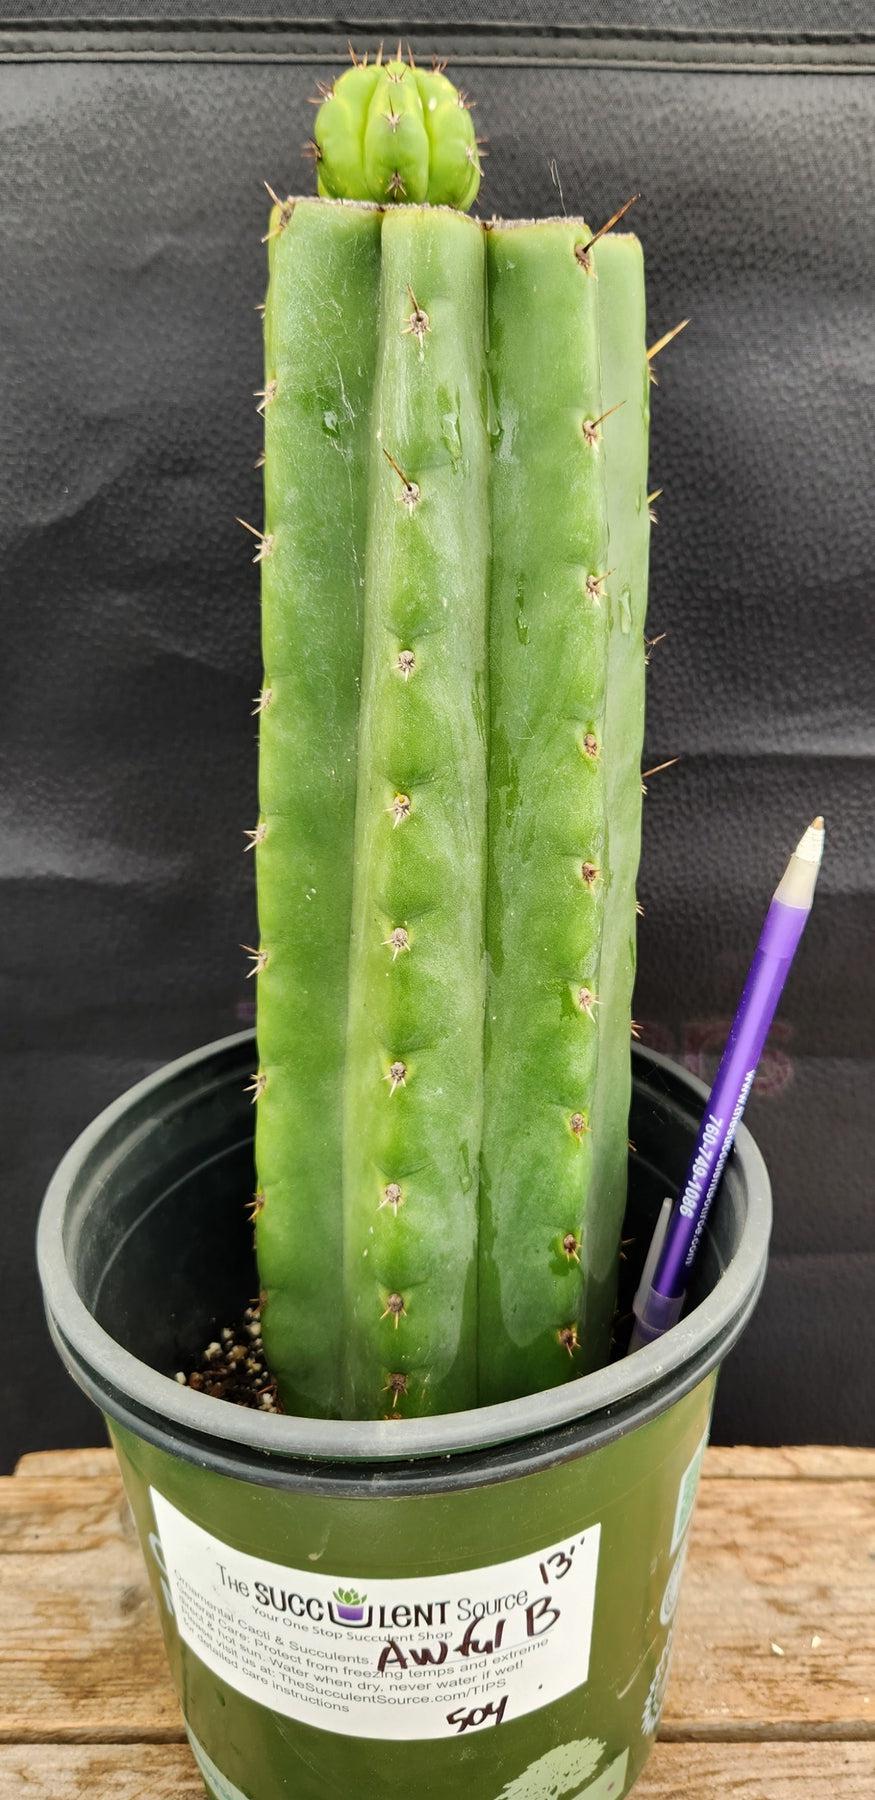 #EC157 EXACT Trichocereus Pachanoi "Awful" Cactus Various sizes-Cactus - Large - Exact-The Succulent Source